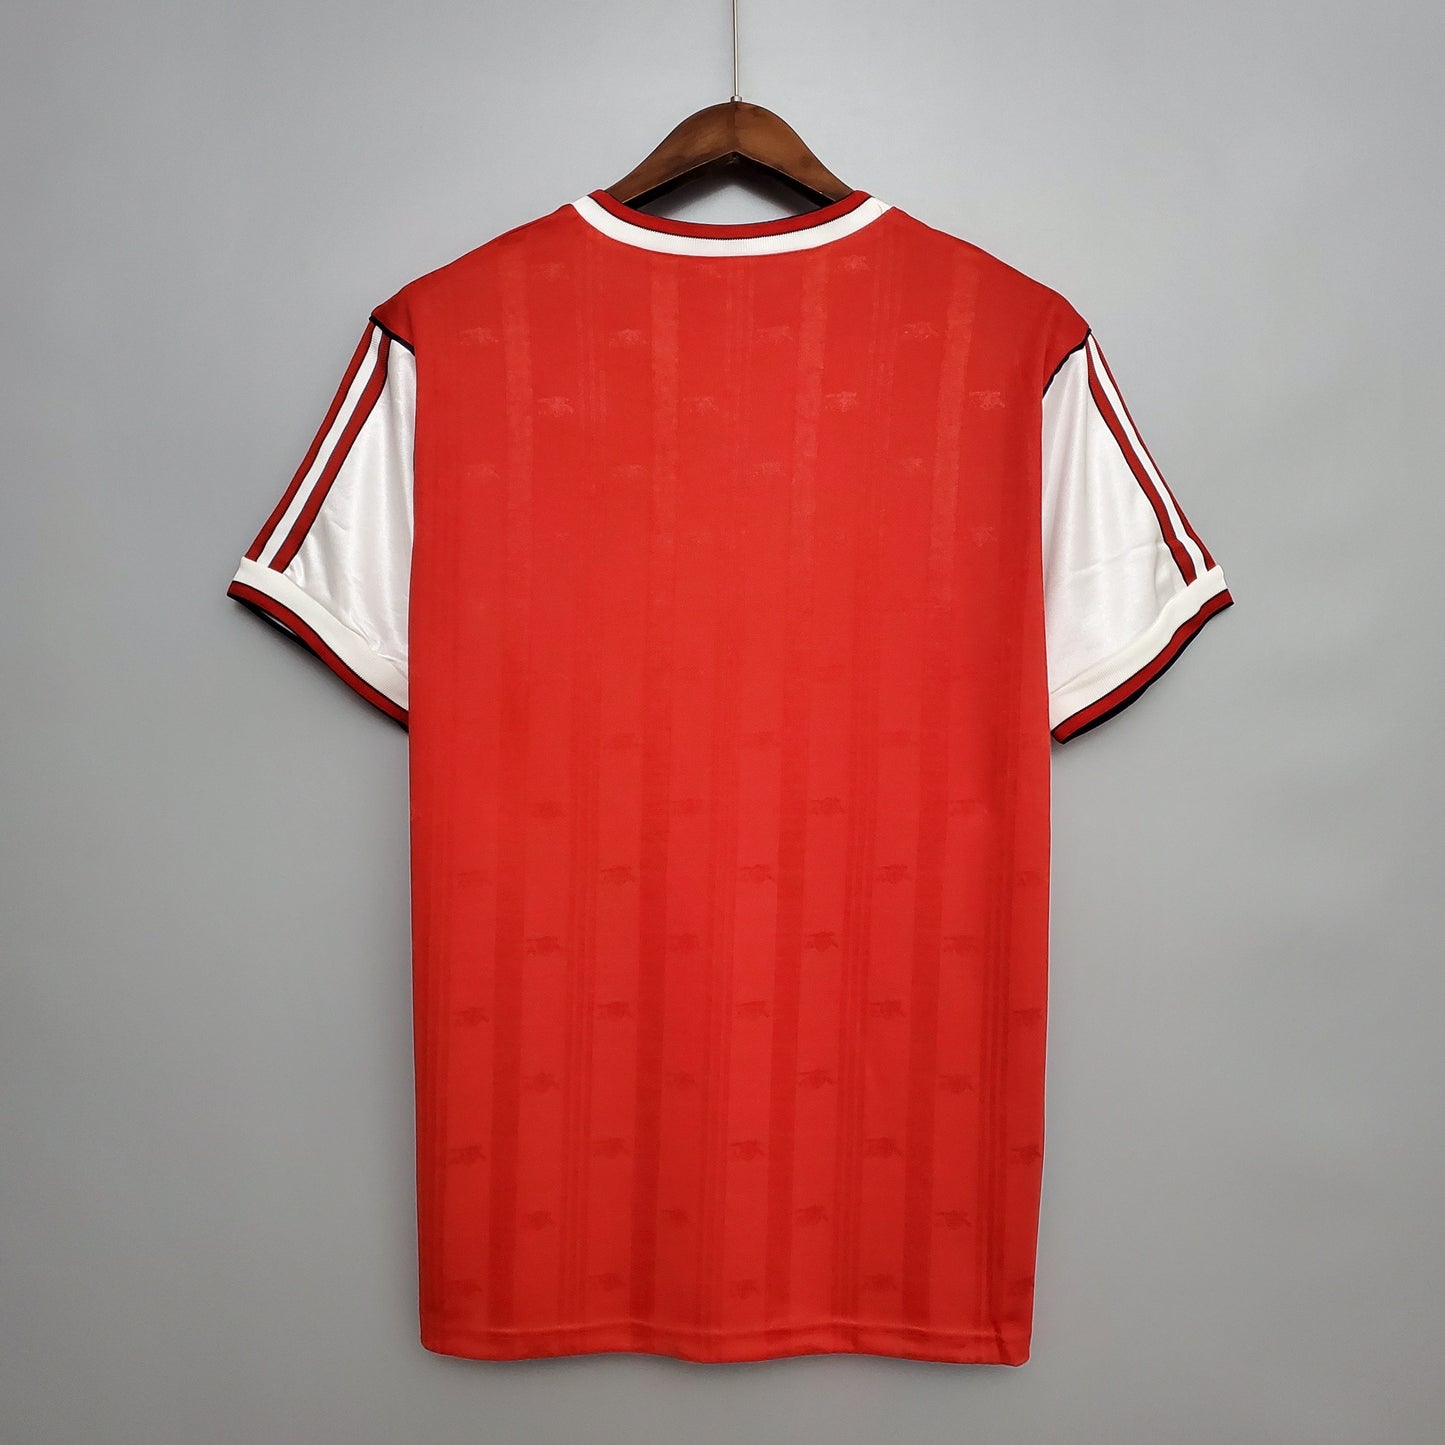 Arsenal Home Kit 88/89